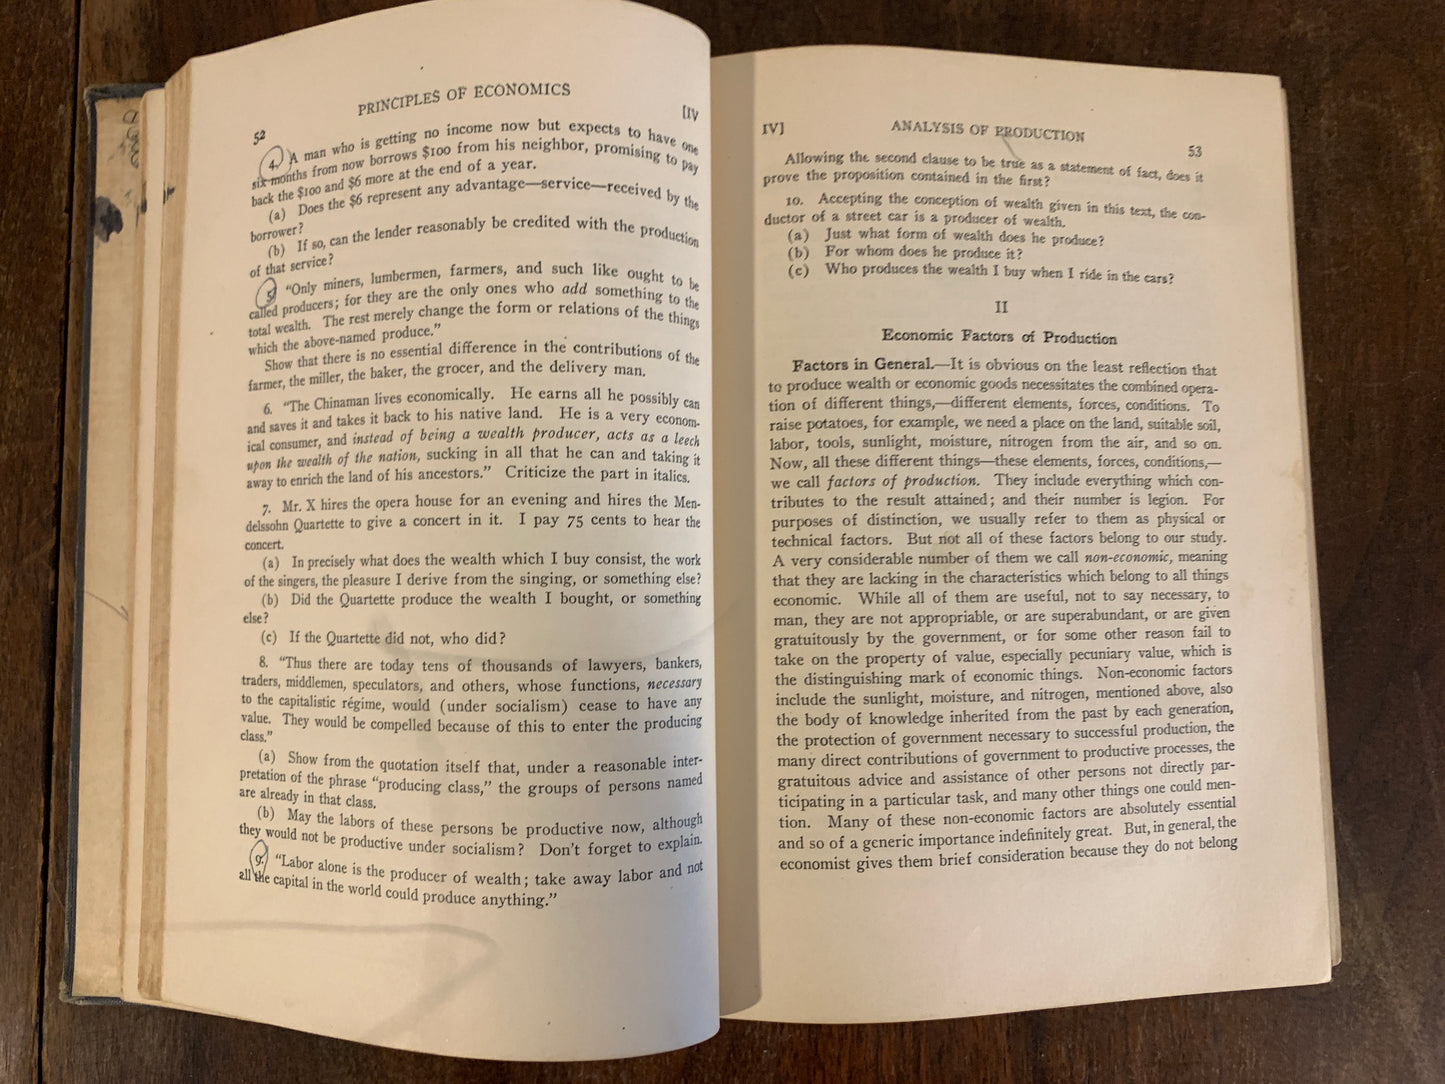 Principles of Economics by F.M. Taylor 1937